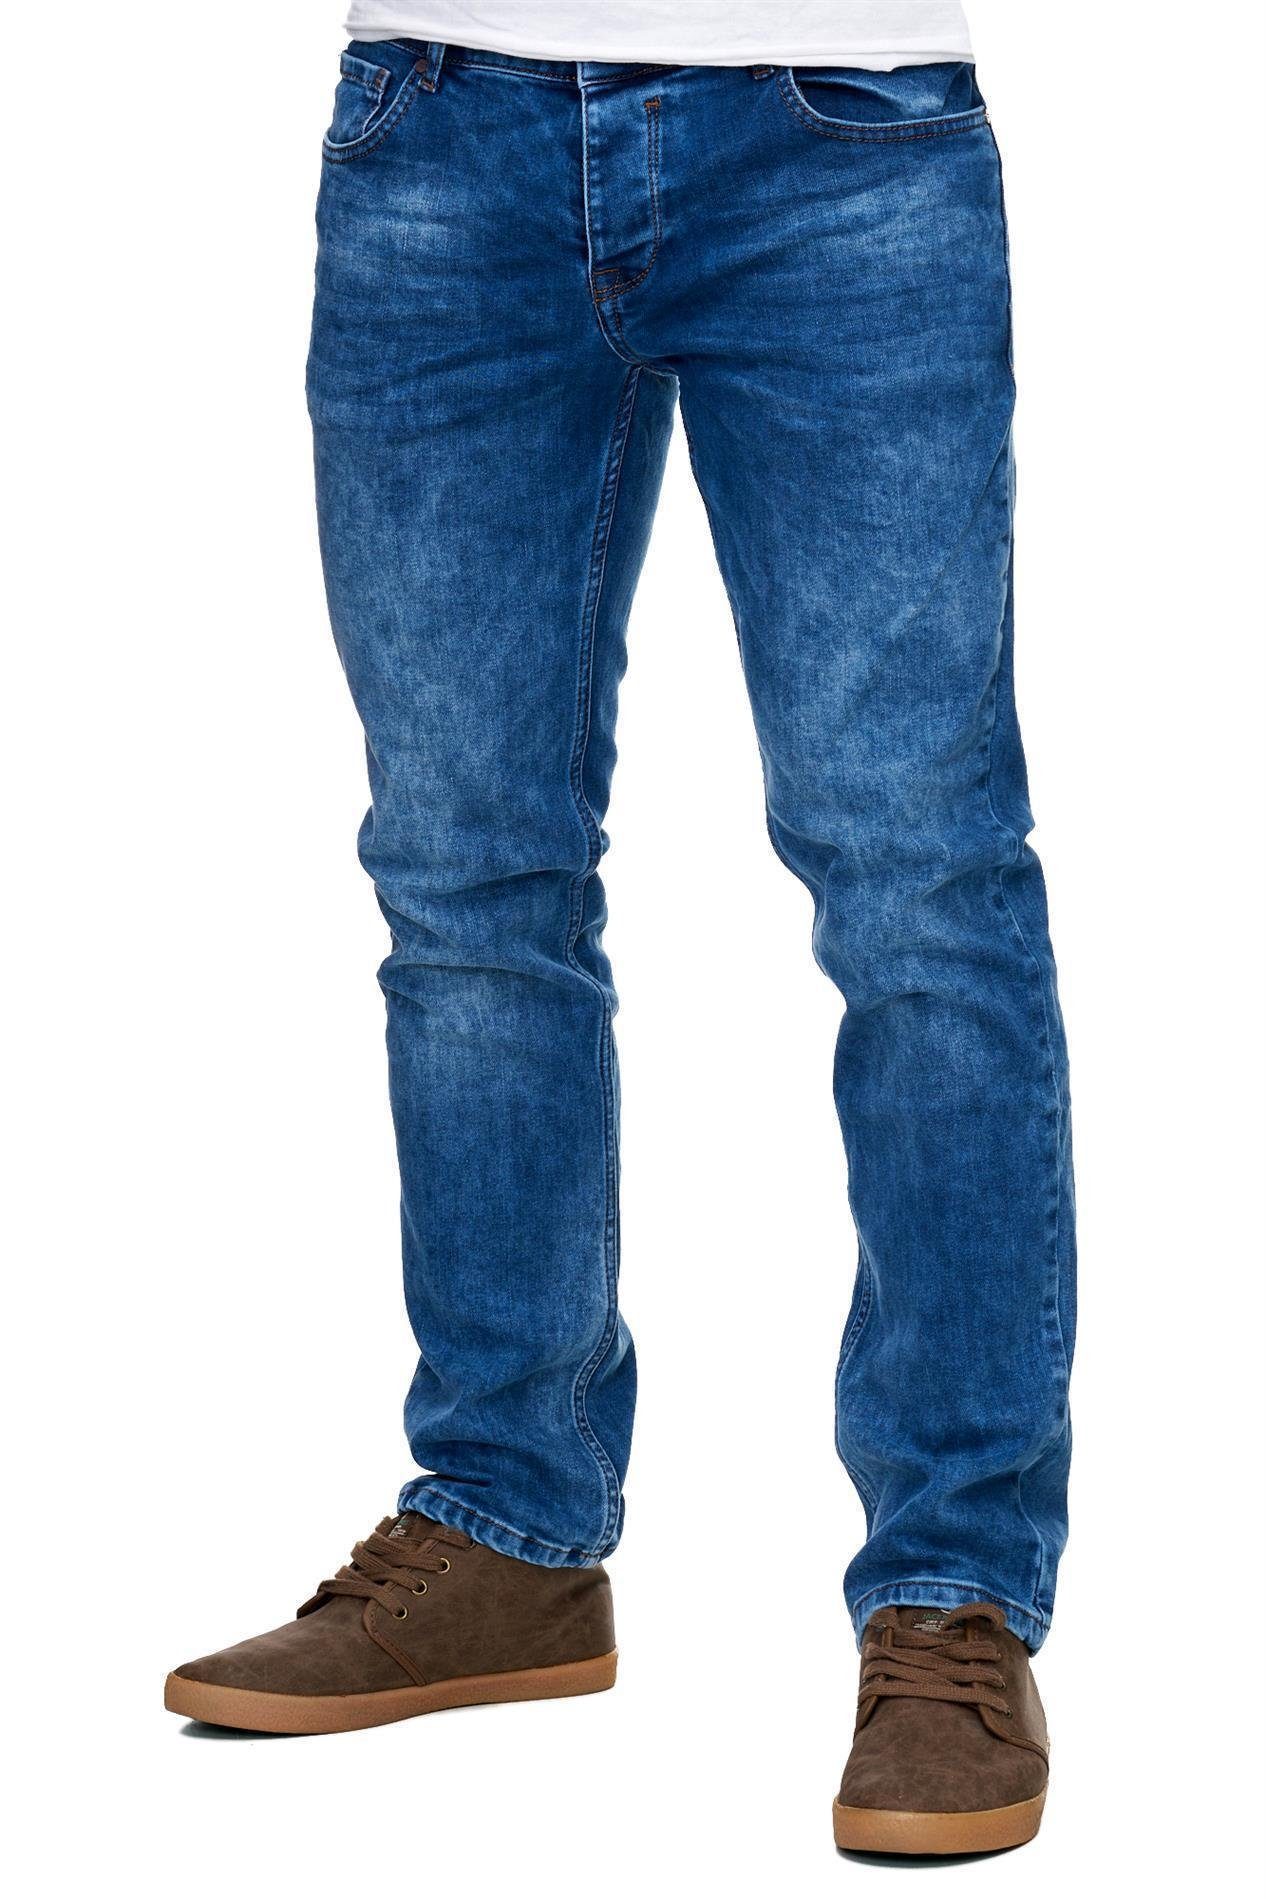 Jeans-Hose Reslad Reslad Fit Jeans-Hose Style Slim Slim Stretch blau Stretch-Denim Basic Stretch-Jeans Fit Jeans-Herren